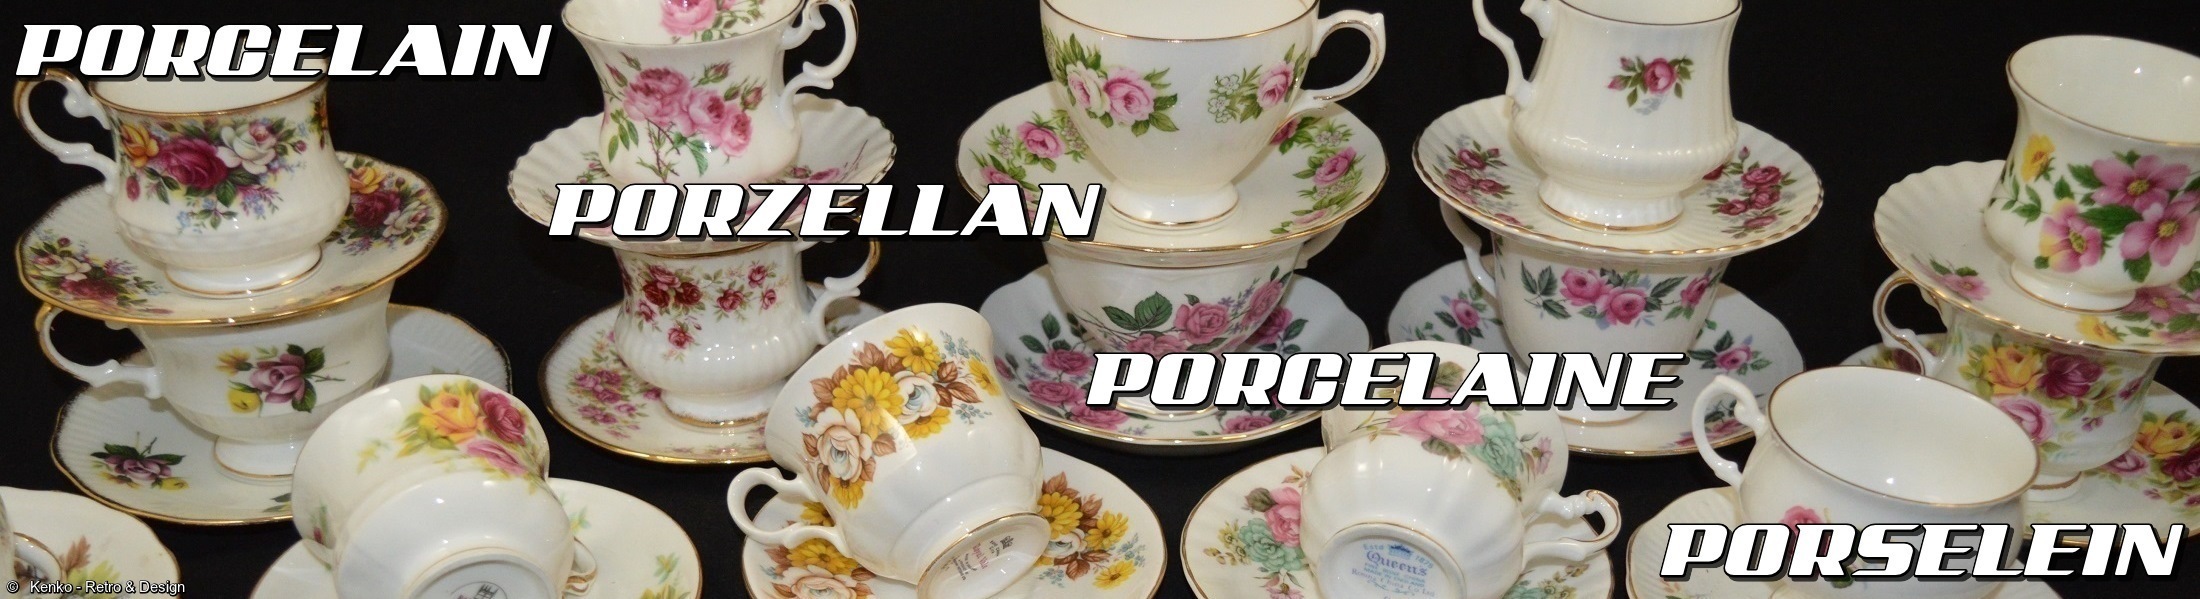 Porcelain | Retro & Design - 2nd hand collectibles - Webshop for 